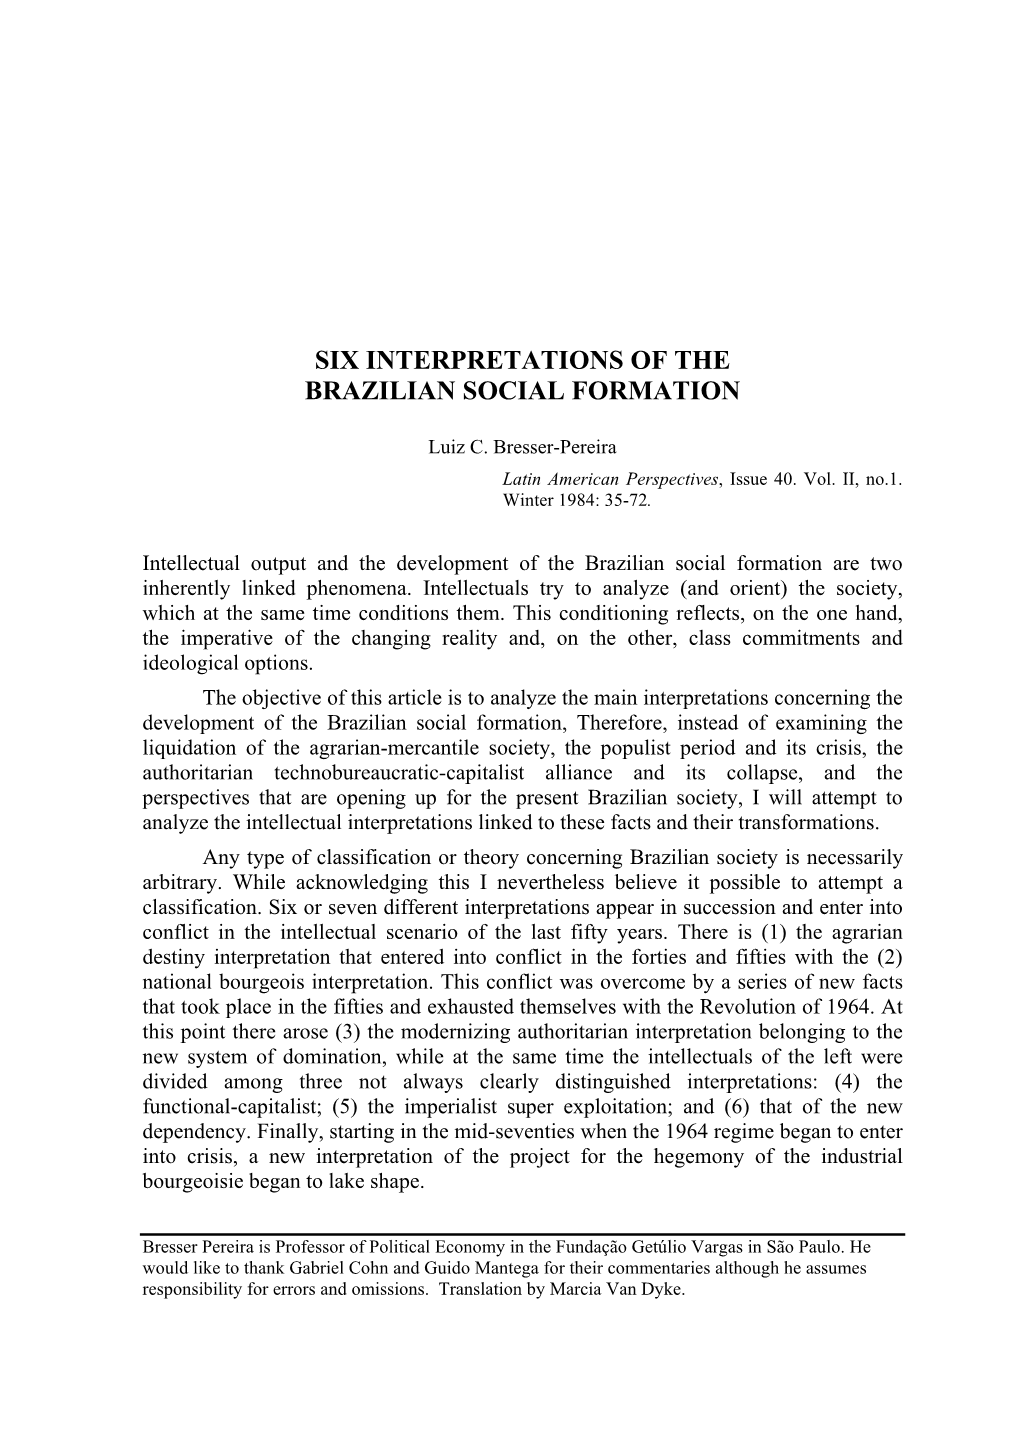 Six Interpretations of the Brazilian Social Formation